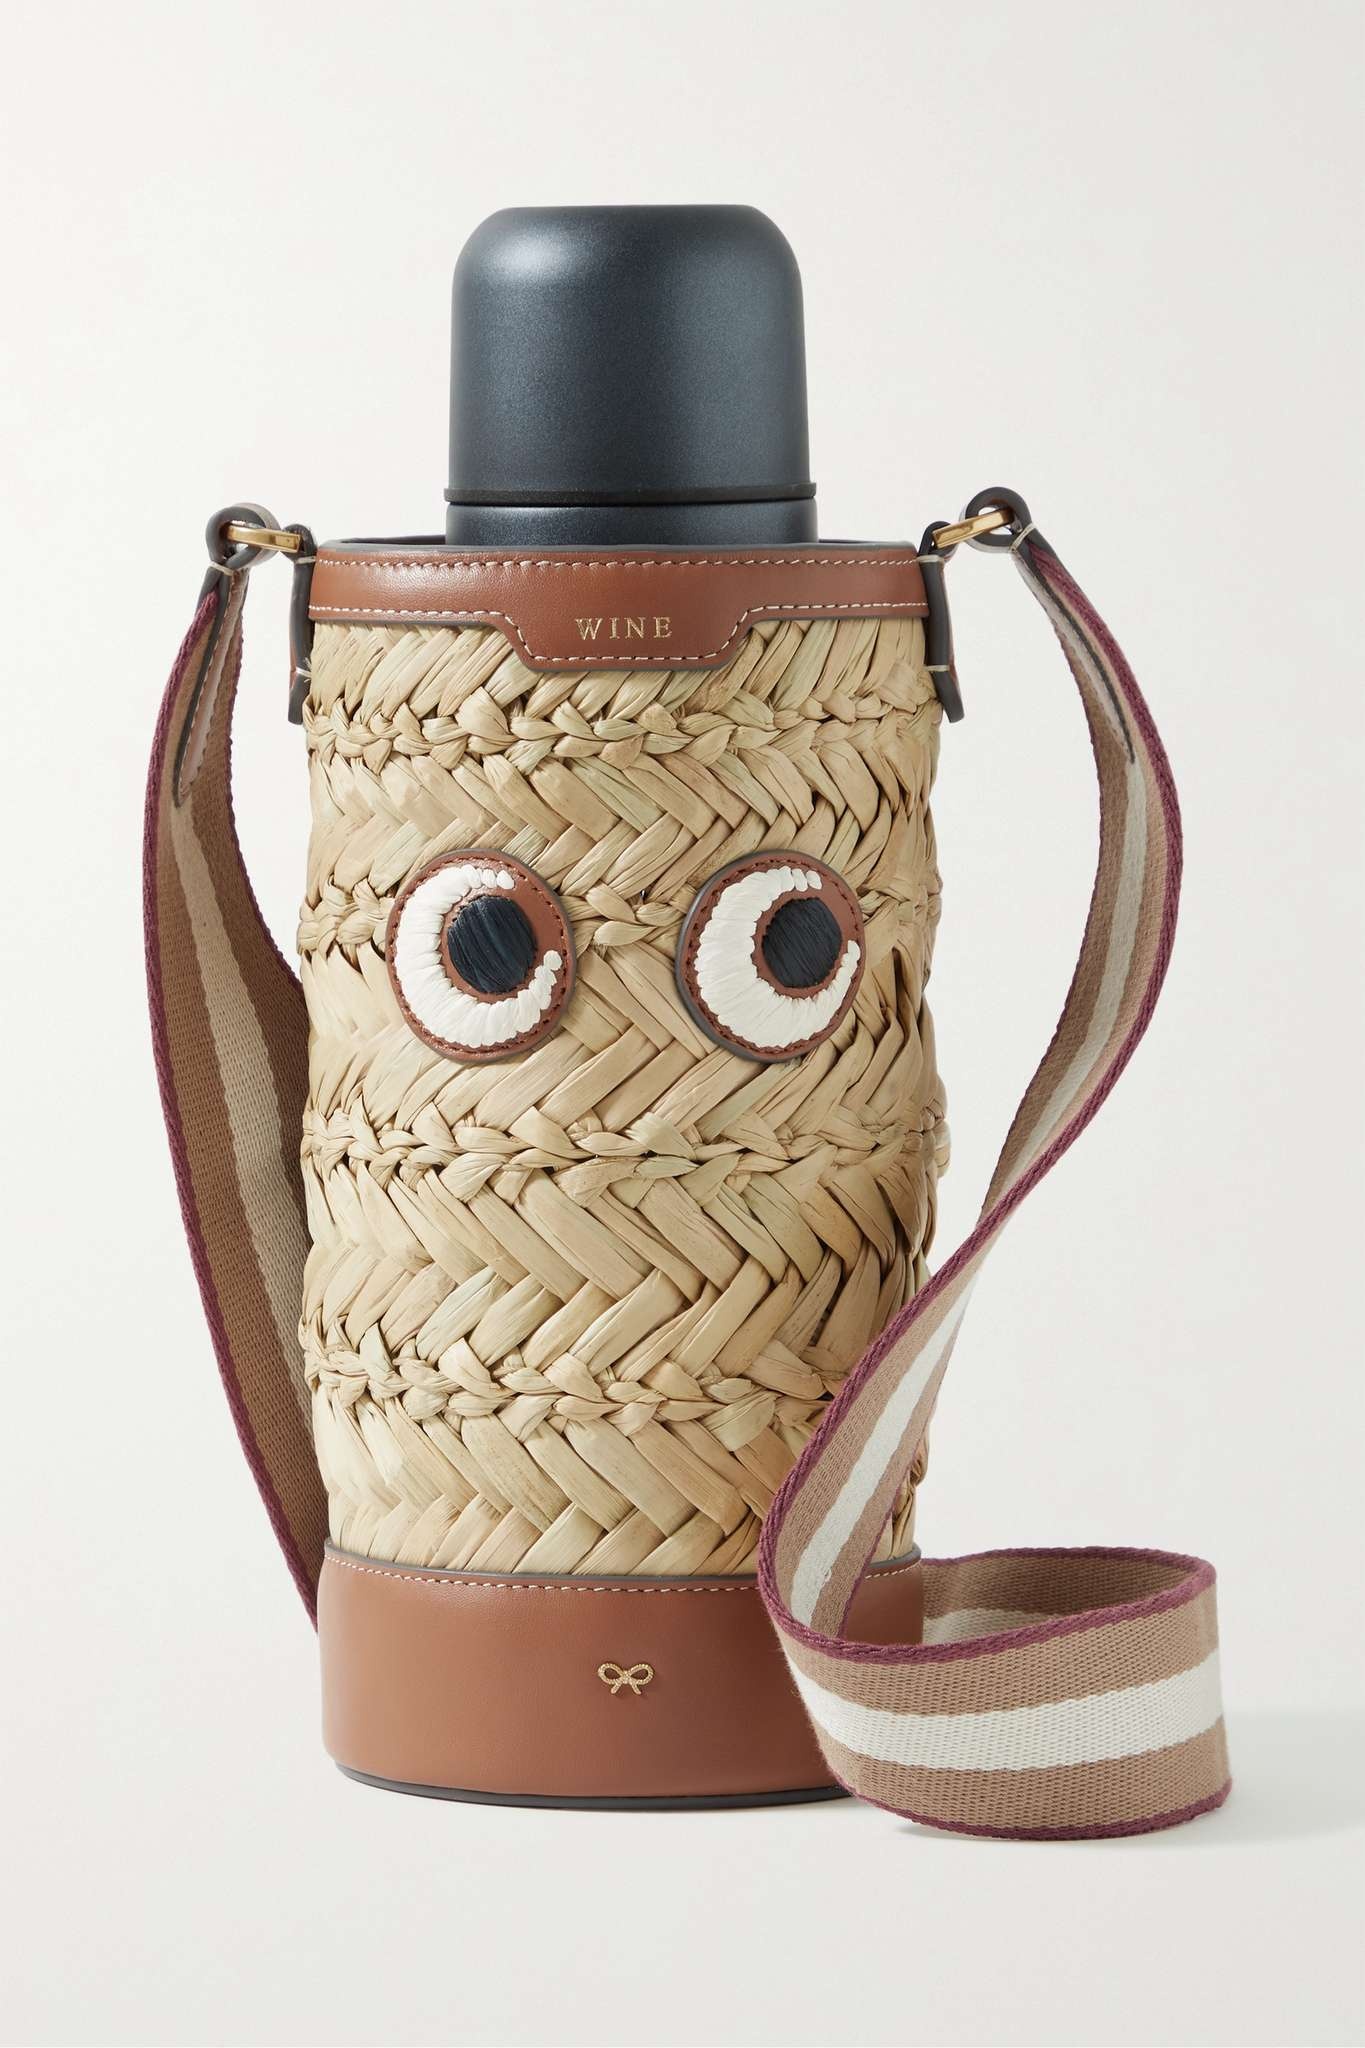 Eyes leather-trimmed straw wine bottle holder - 6